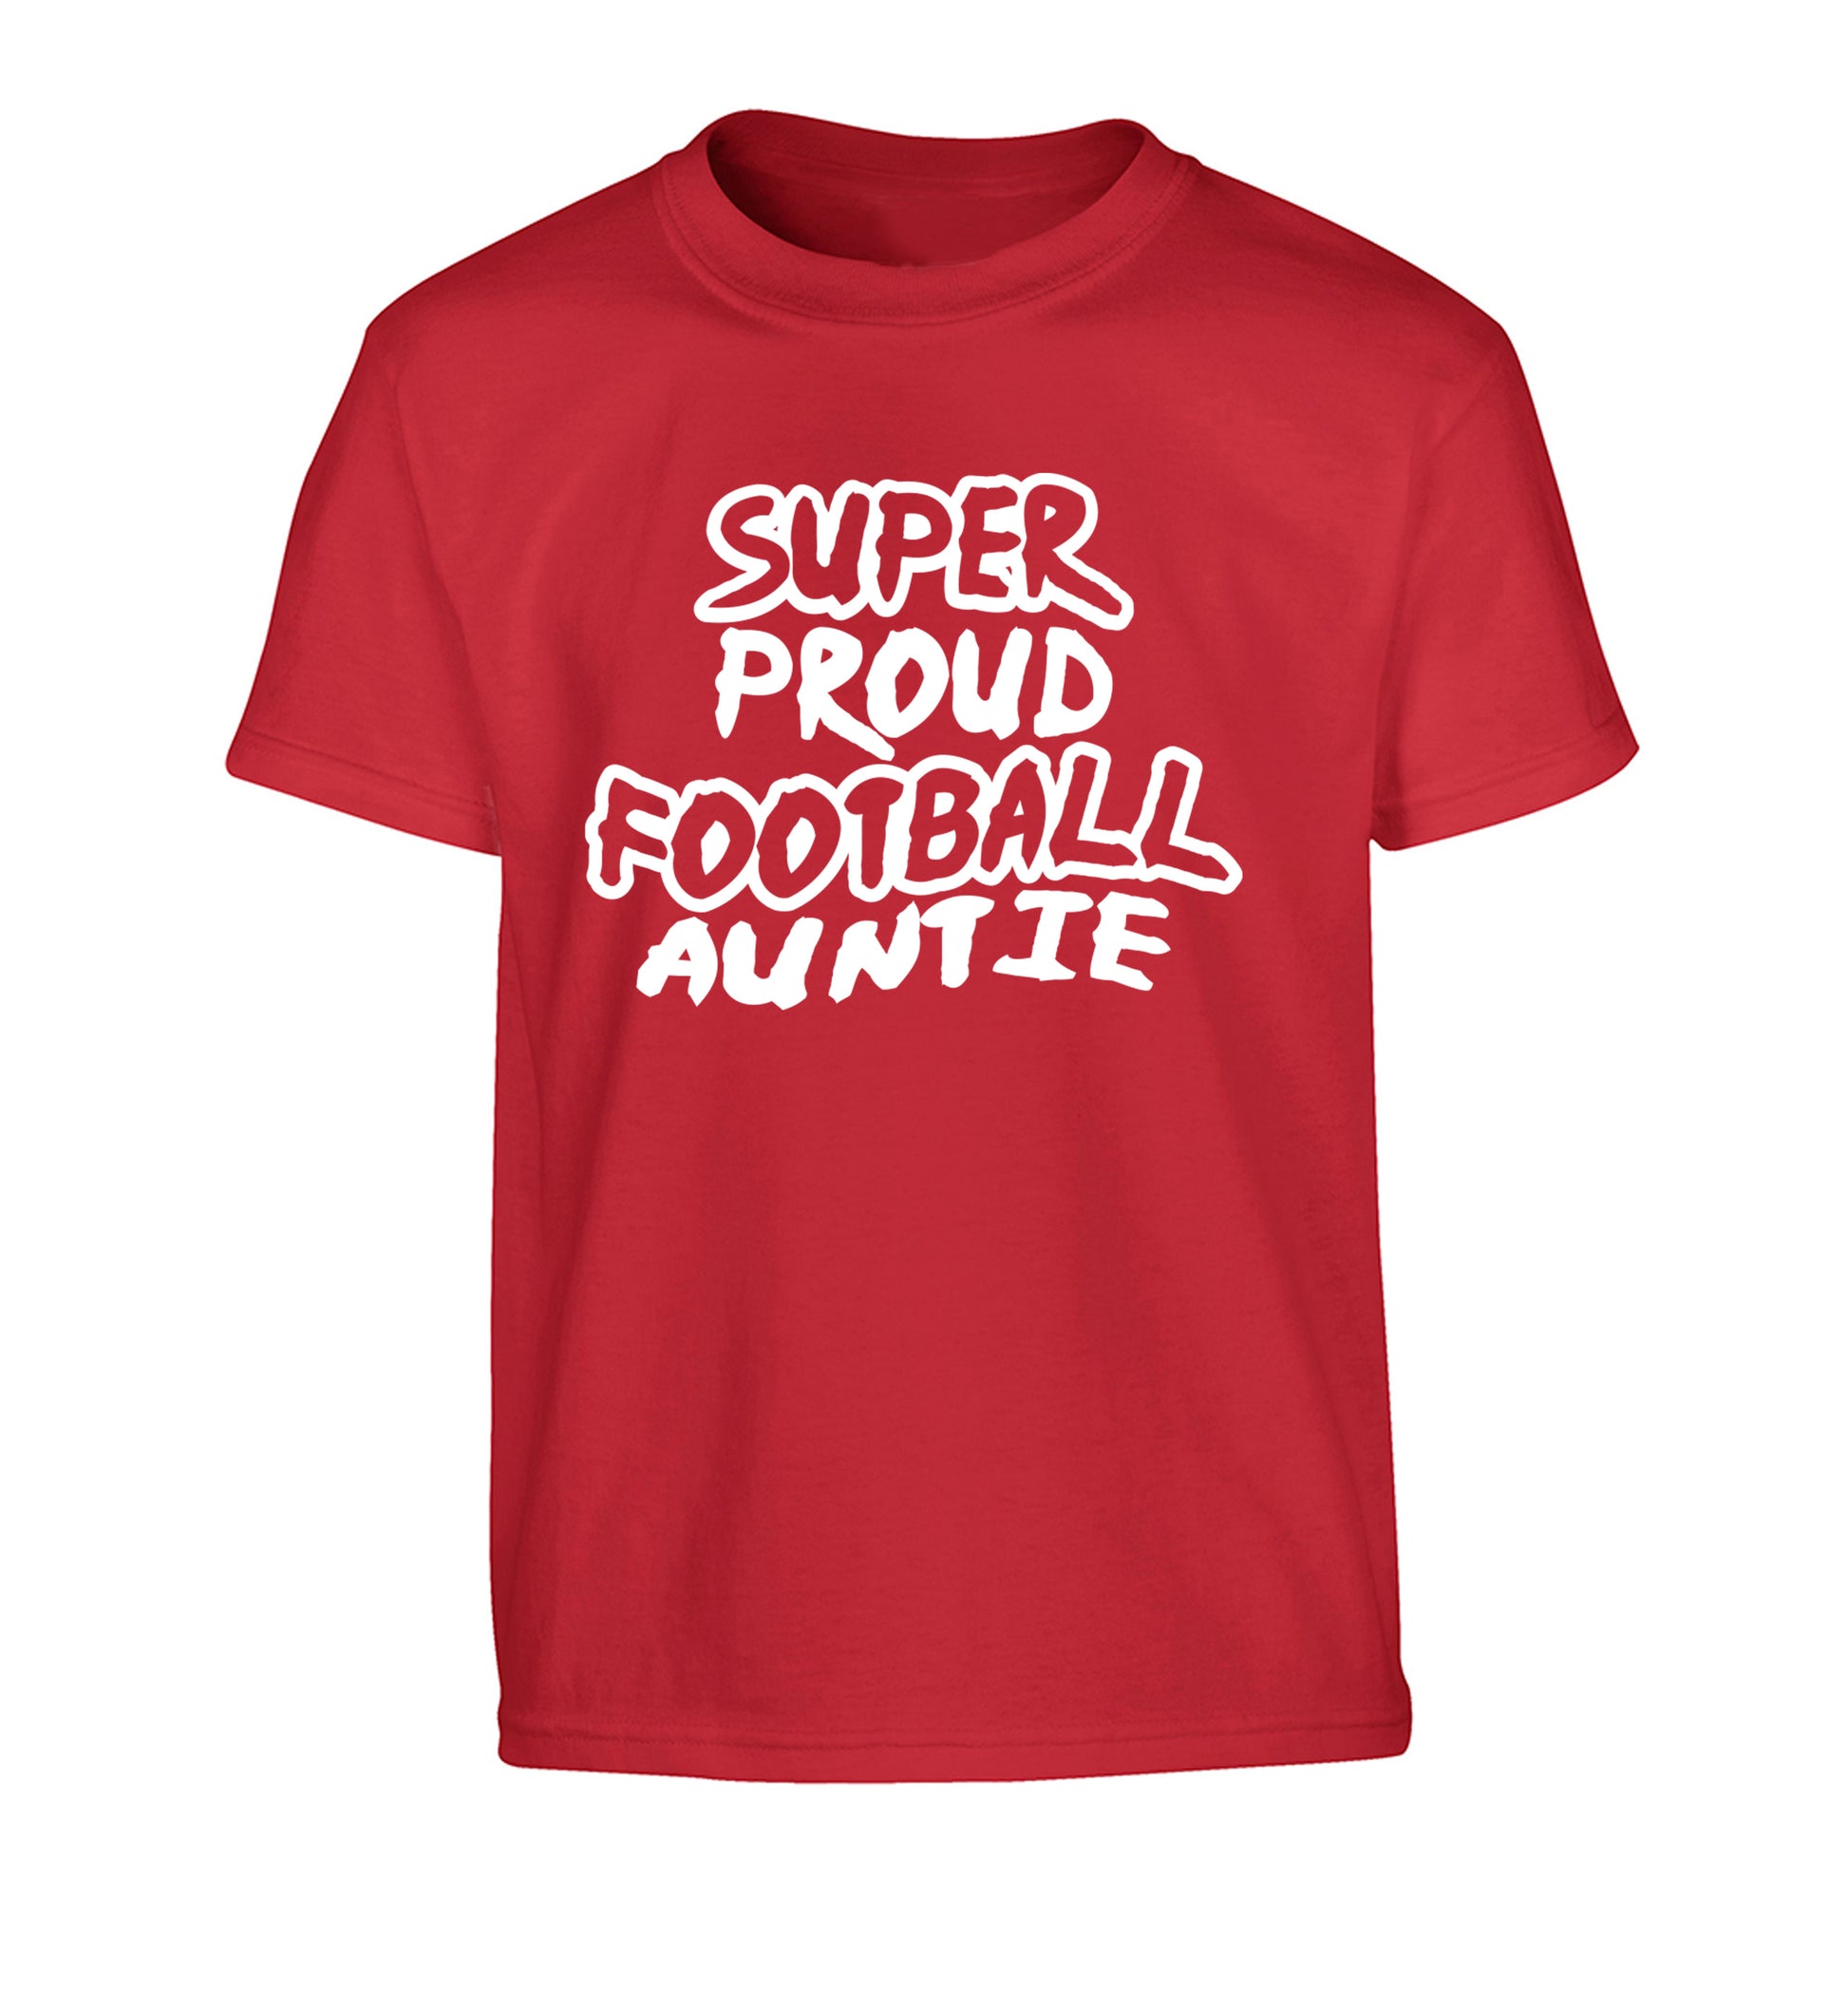 Super proud football auntie Children's red Tshirt 12-14 Years